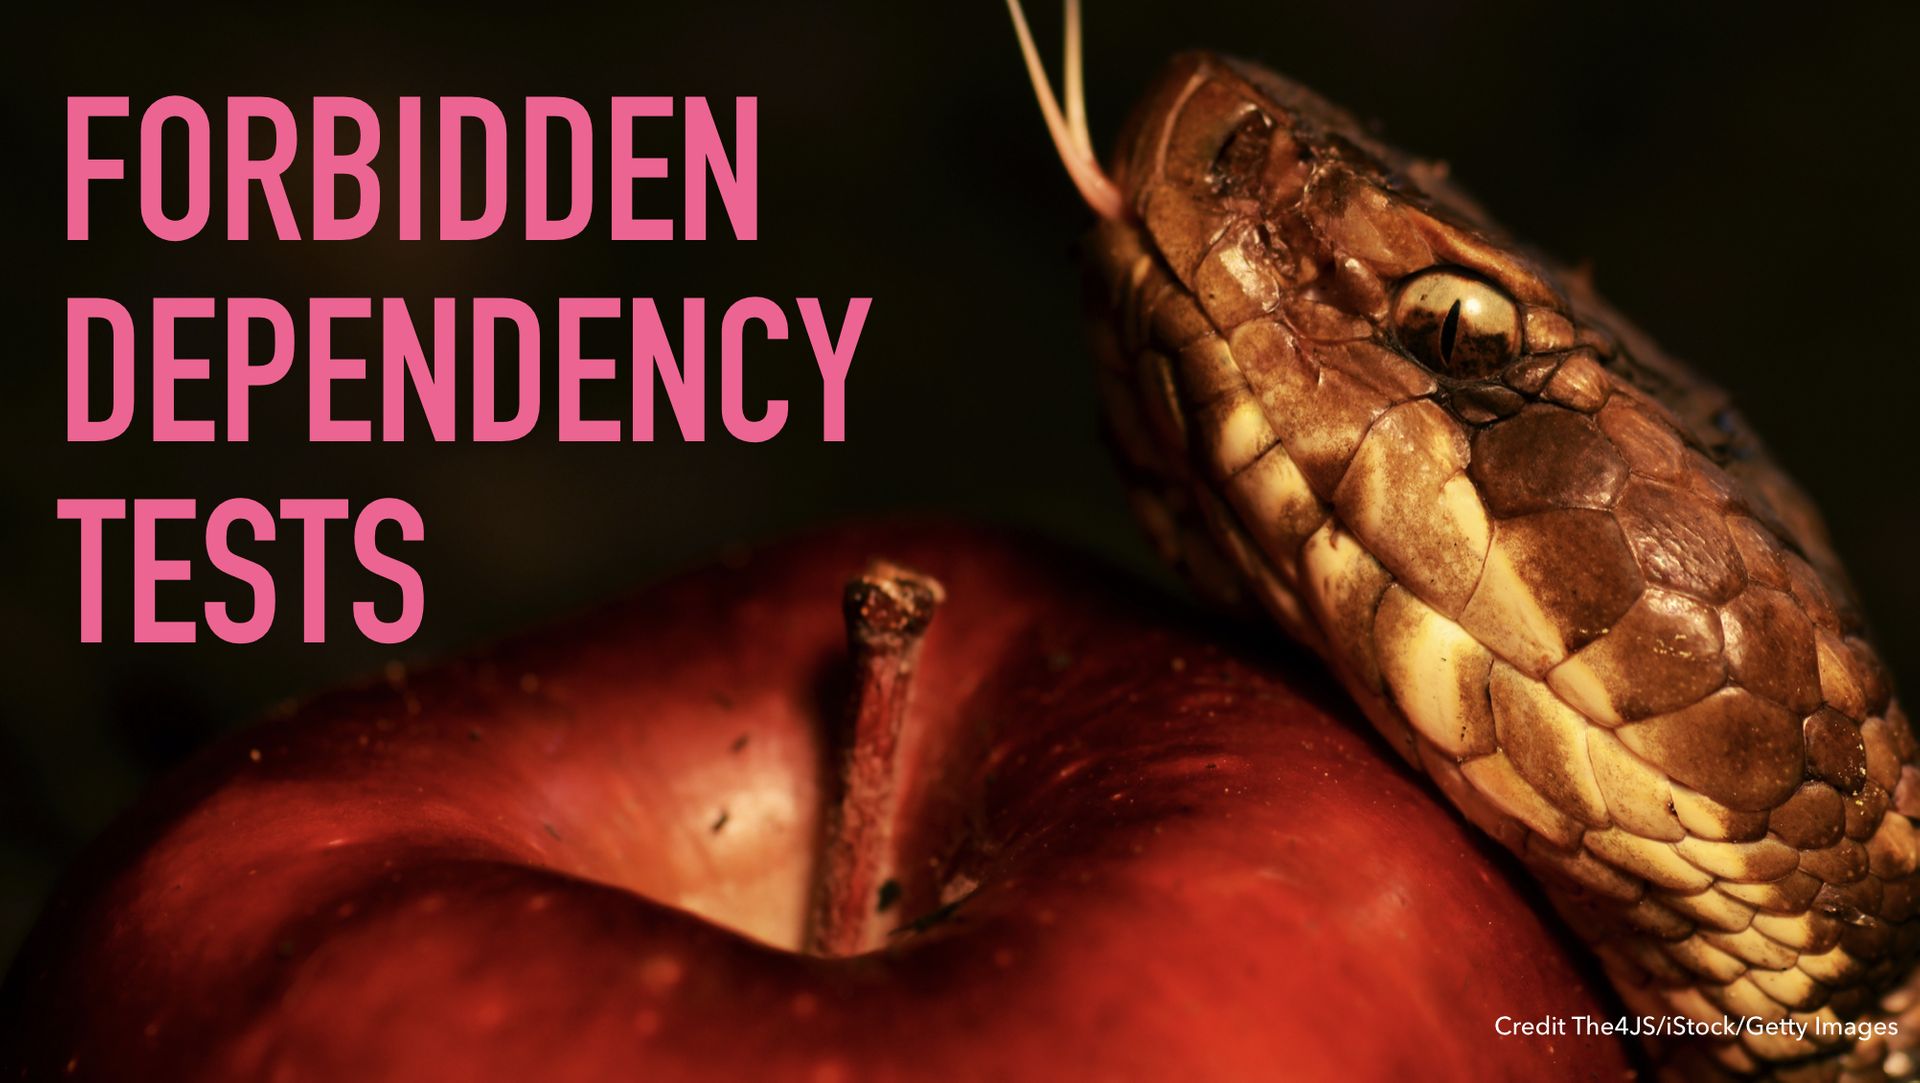 Slide text: Forbidden dependency tests.